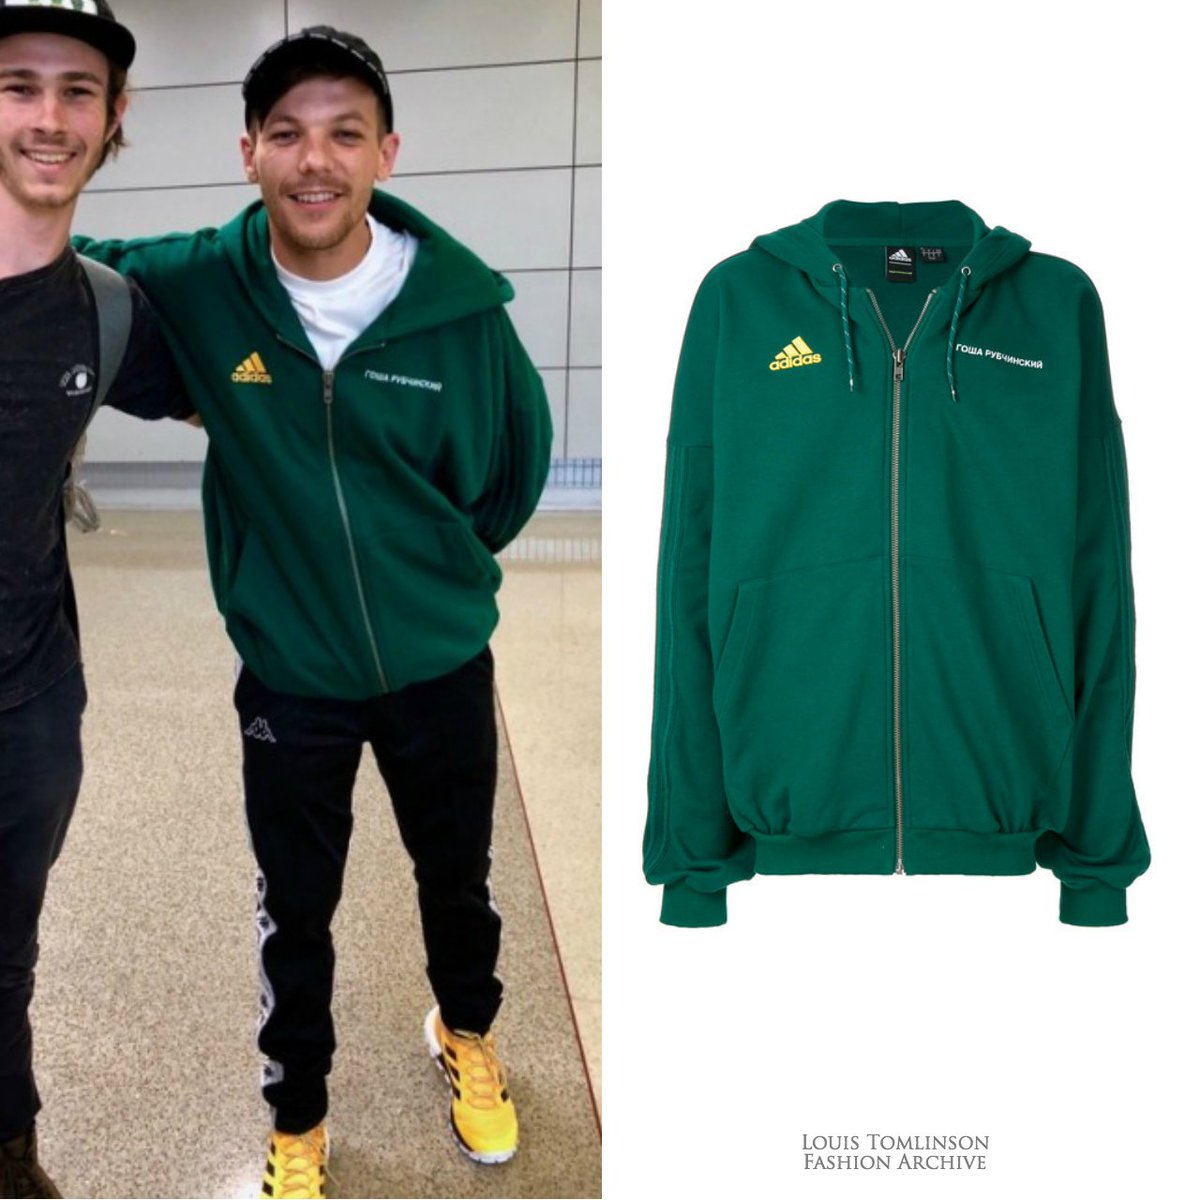 principalmente Oxidado calcular Louis Tomlinson Fashion Archive on Twitter: "06/24/18* | Louis wore a  #GoshaRubchinskiy x @adidas zipped jacket ($278) in Philadelphia  https://t.co/GGJ2fg8CBK https://t.co/zZxkiucTU8" / Twitter